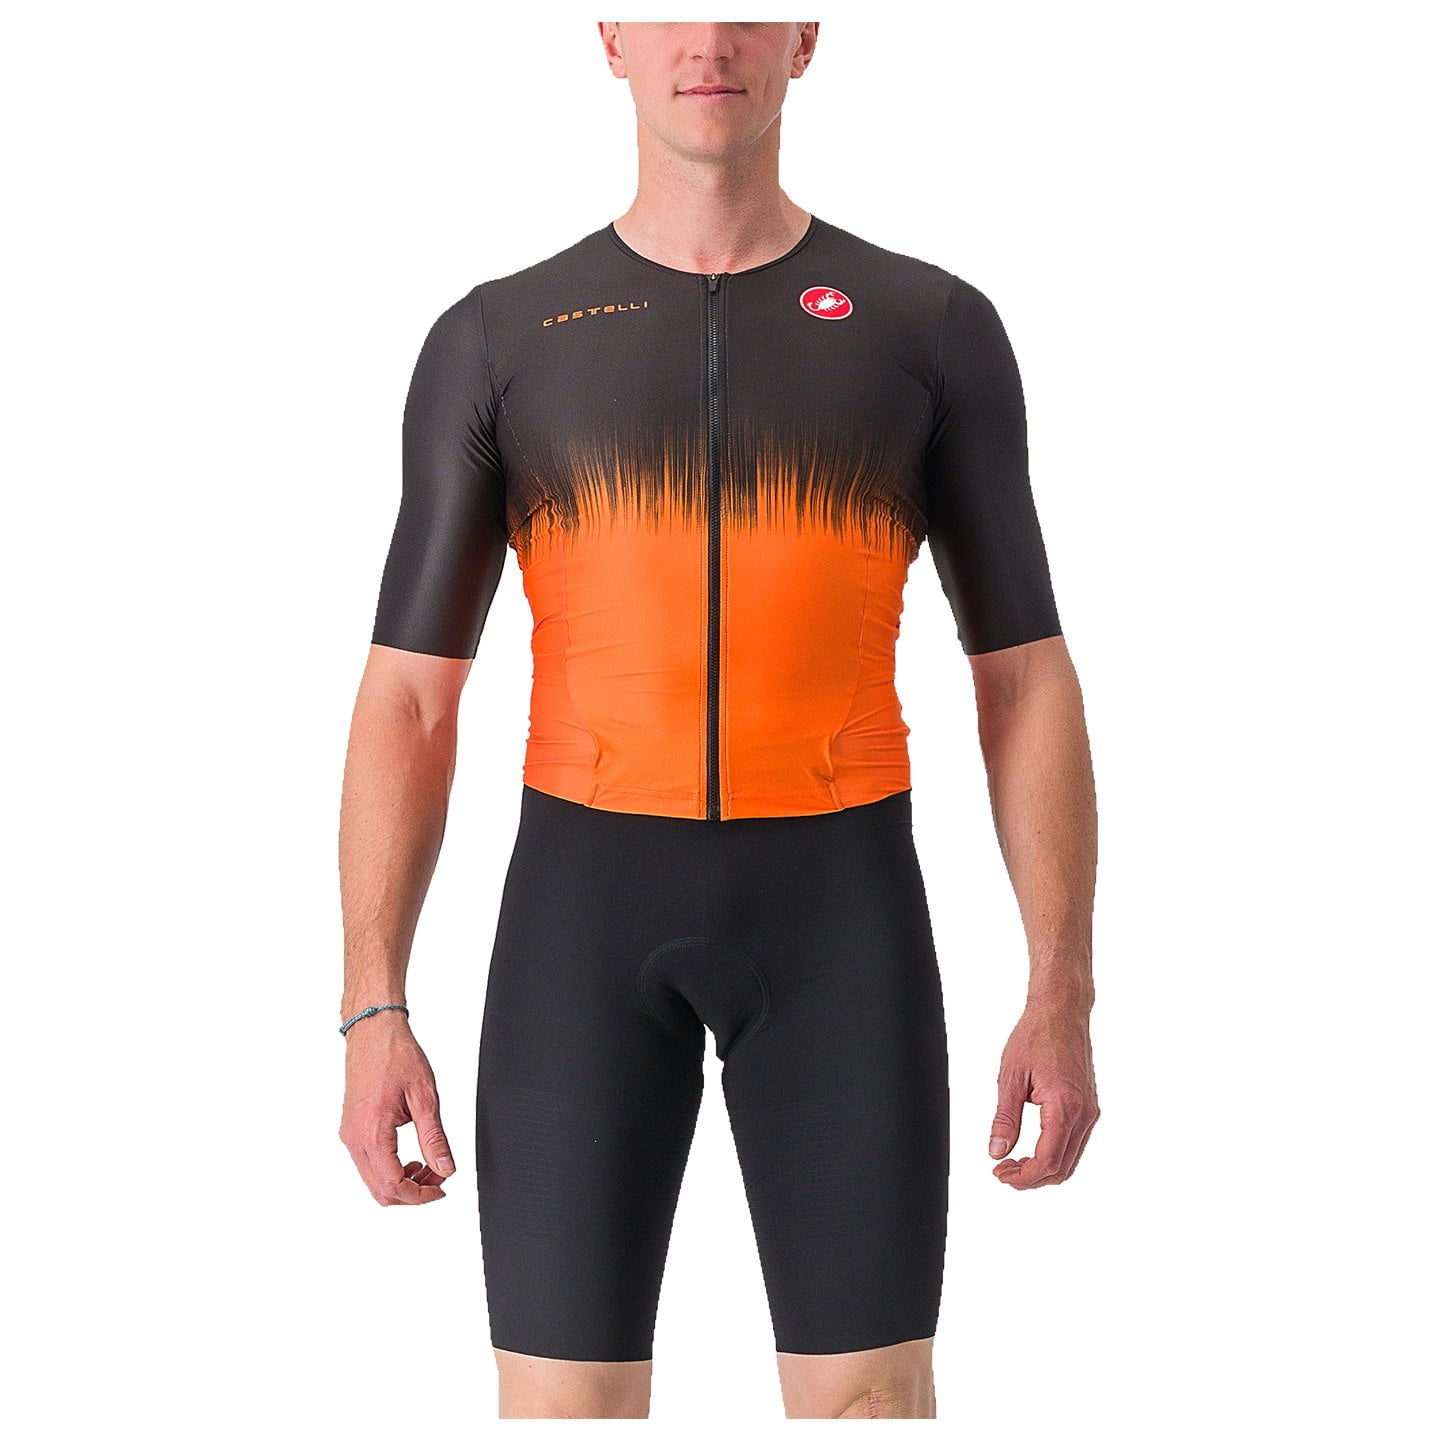 CASTELLI Sanremo Ultra Tri Suit Tri Suit, for men, size S, Triathlon suit, Triathlon clothing